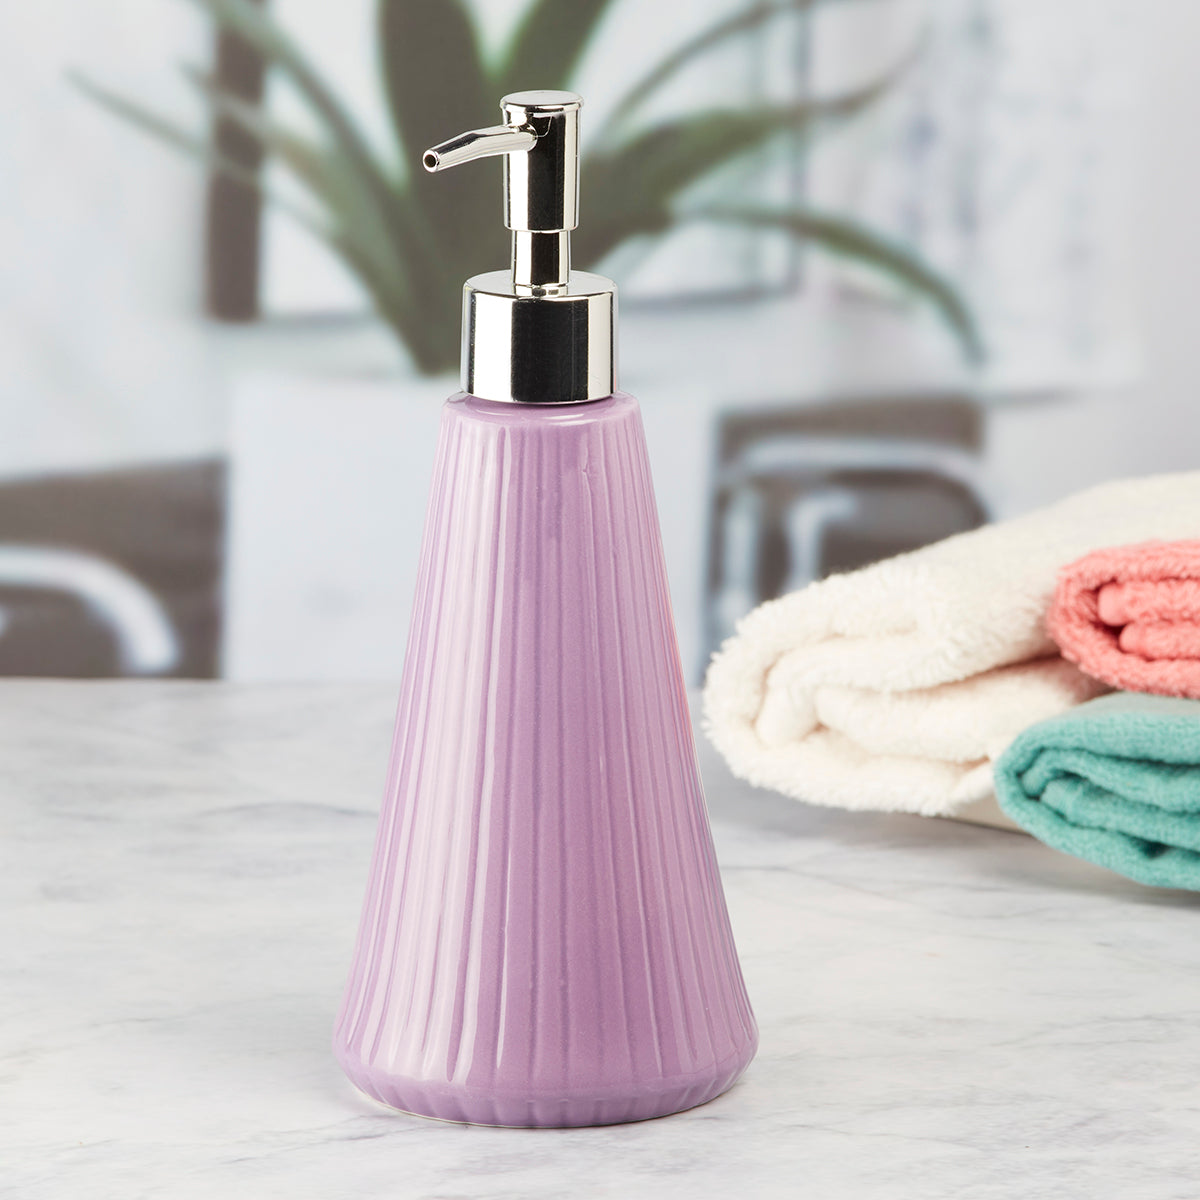 Ceramic Soap Dispenser Pump for Bathroom for Bath Gel, Lotion, Shampoo (6037)